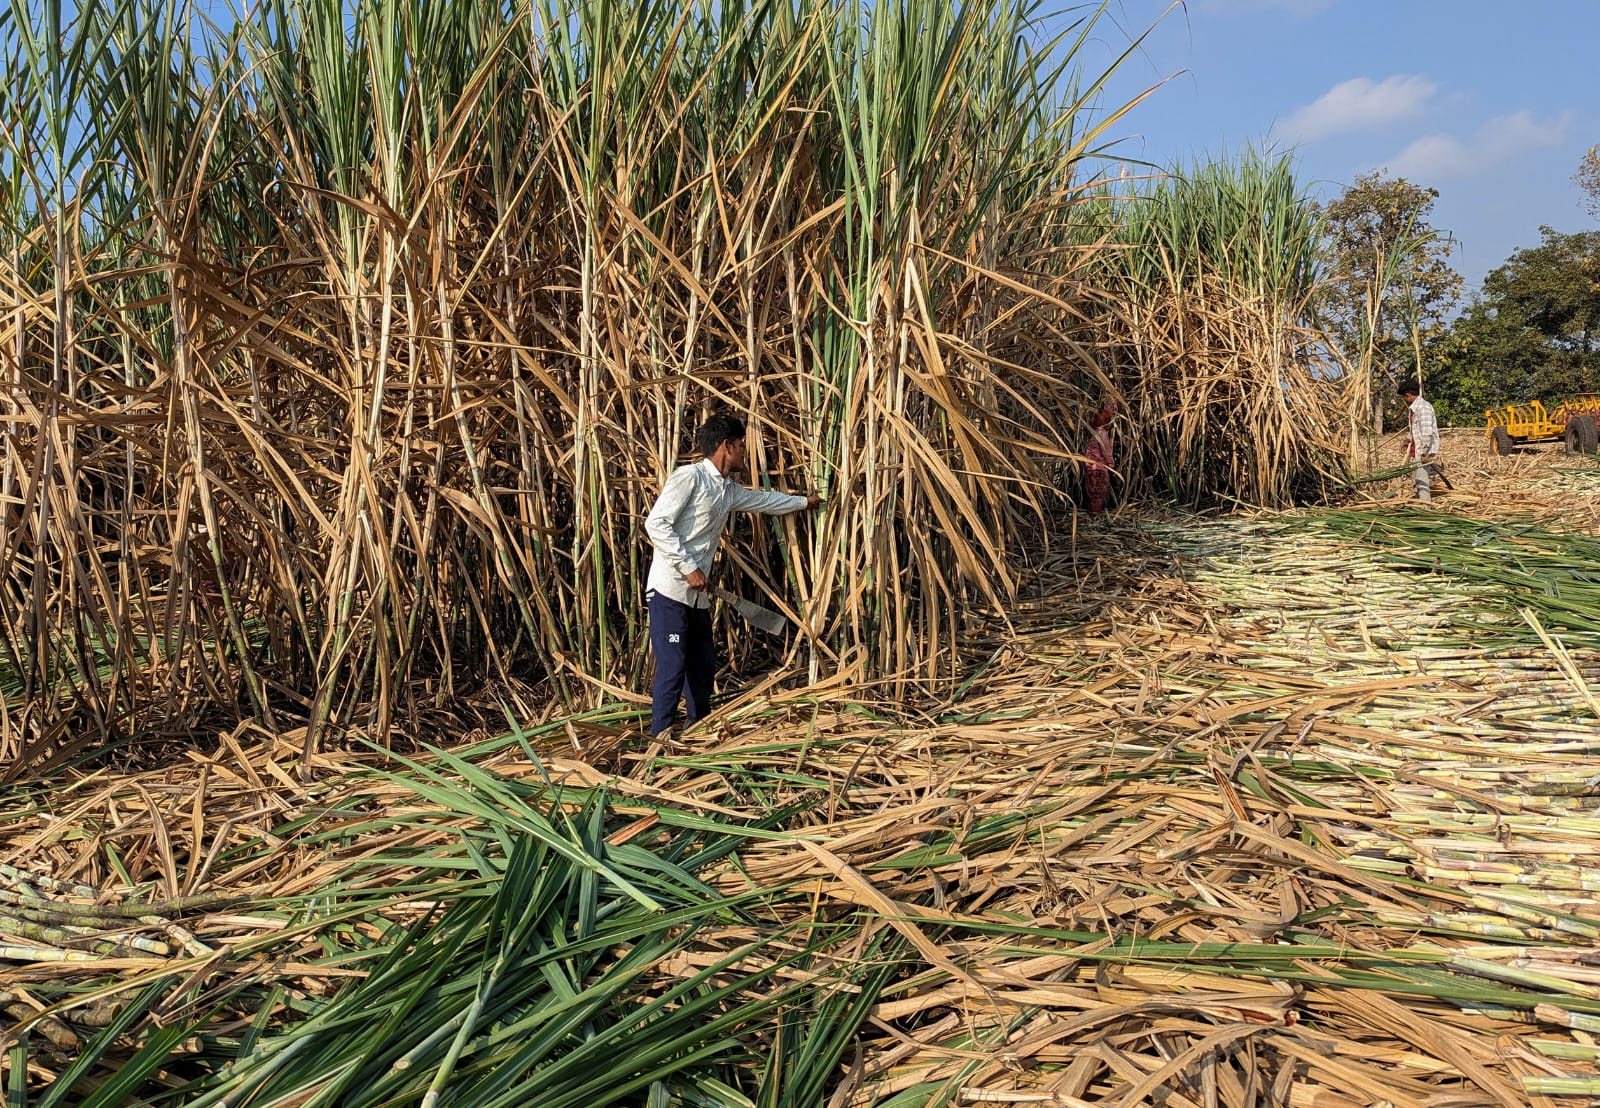 Sugar Mills in State Achieve Record Sugarcane Crushing Figures This Season